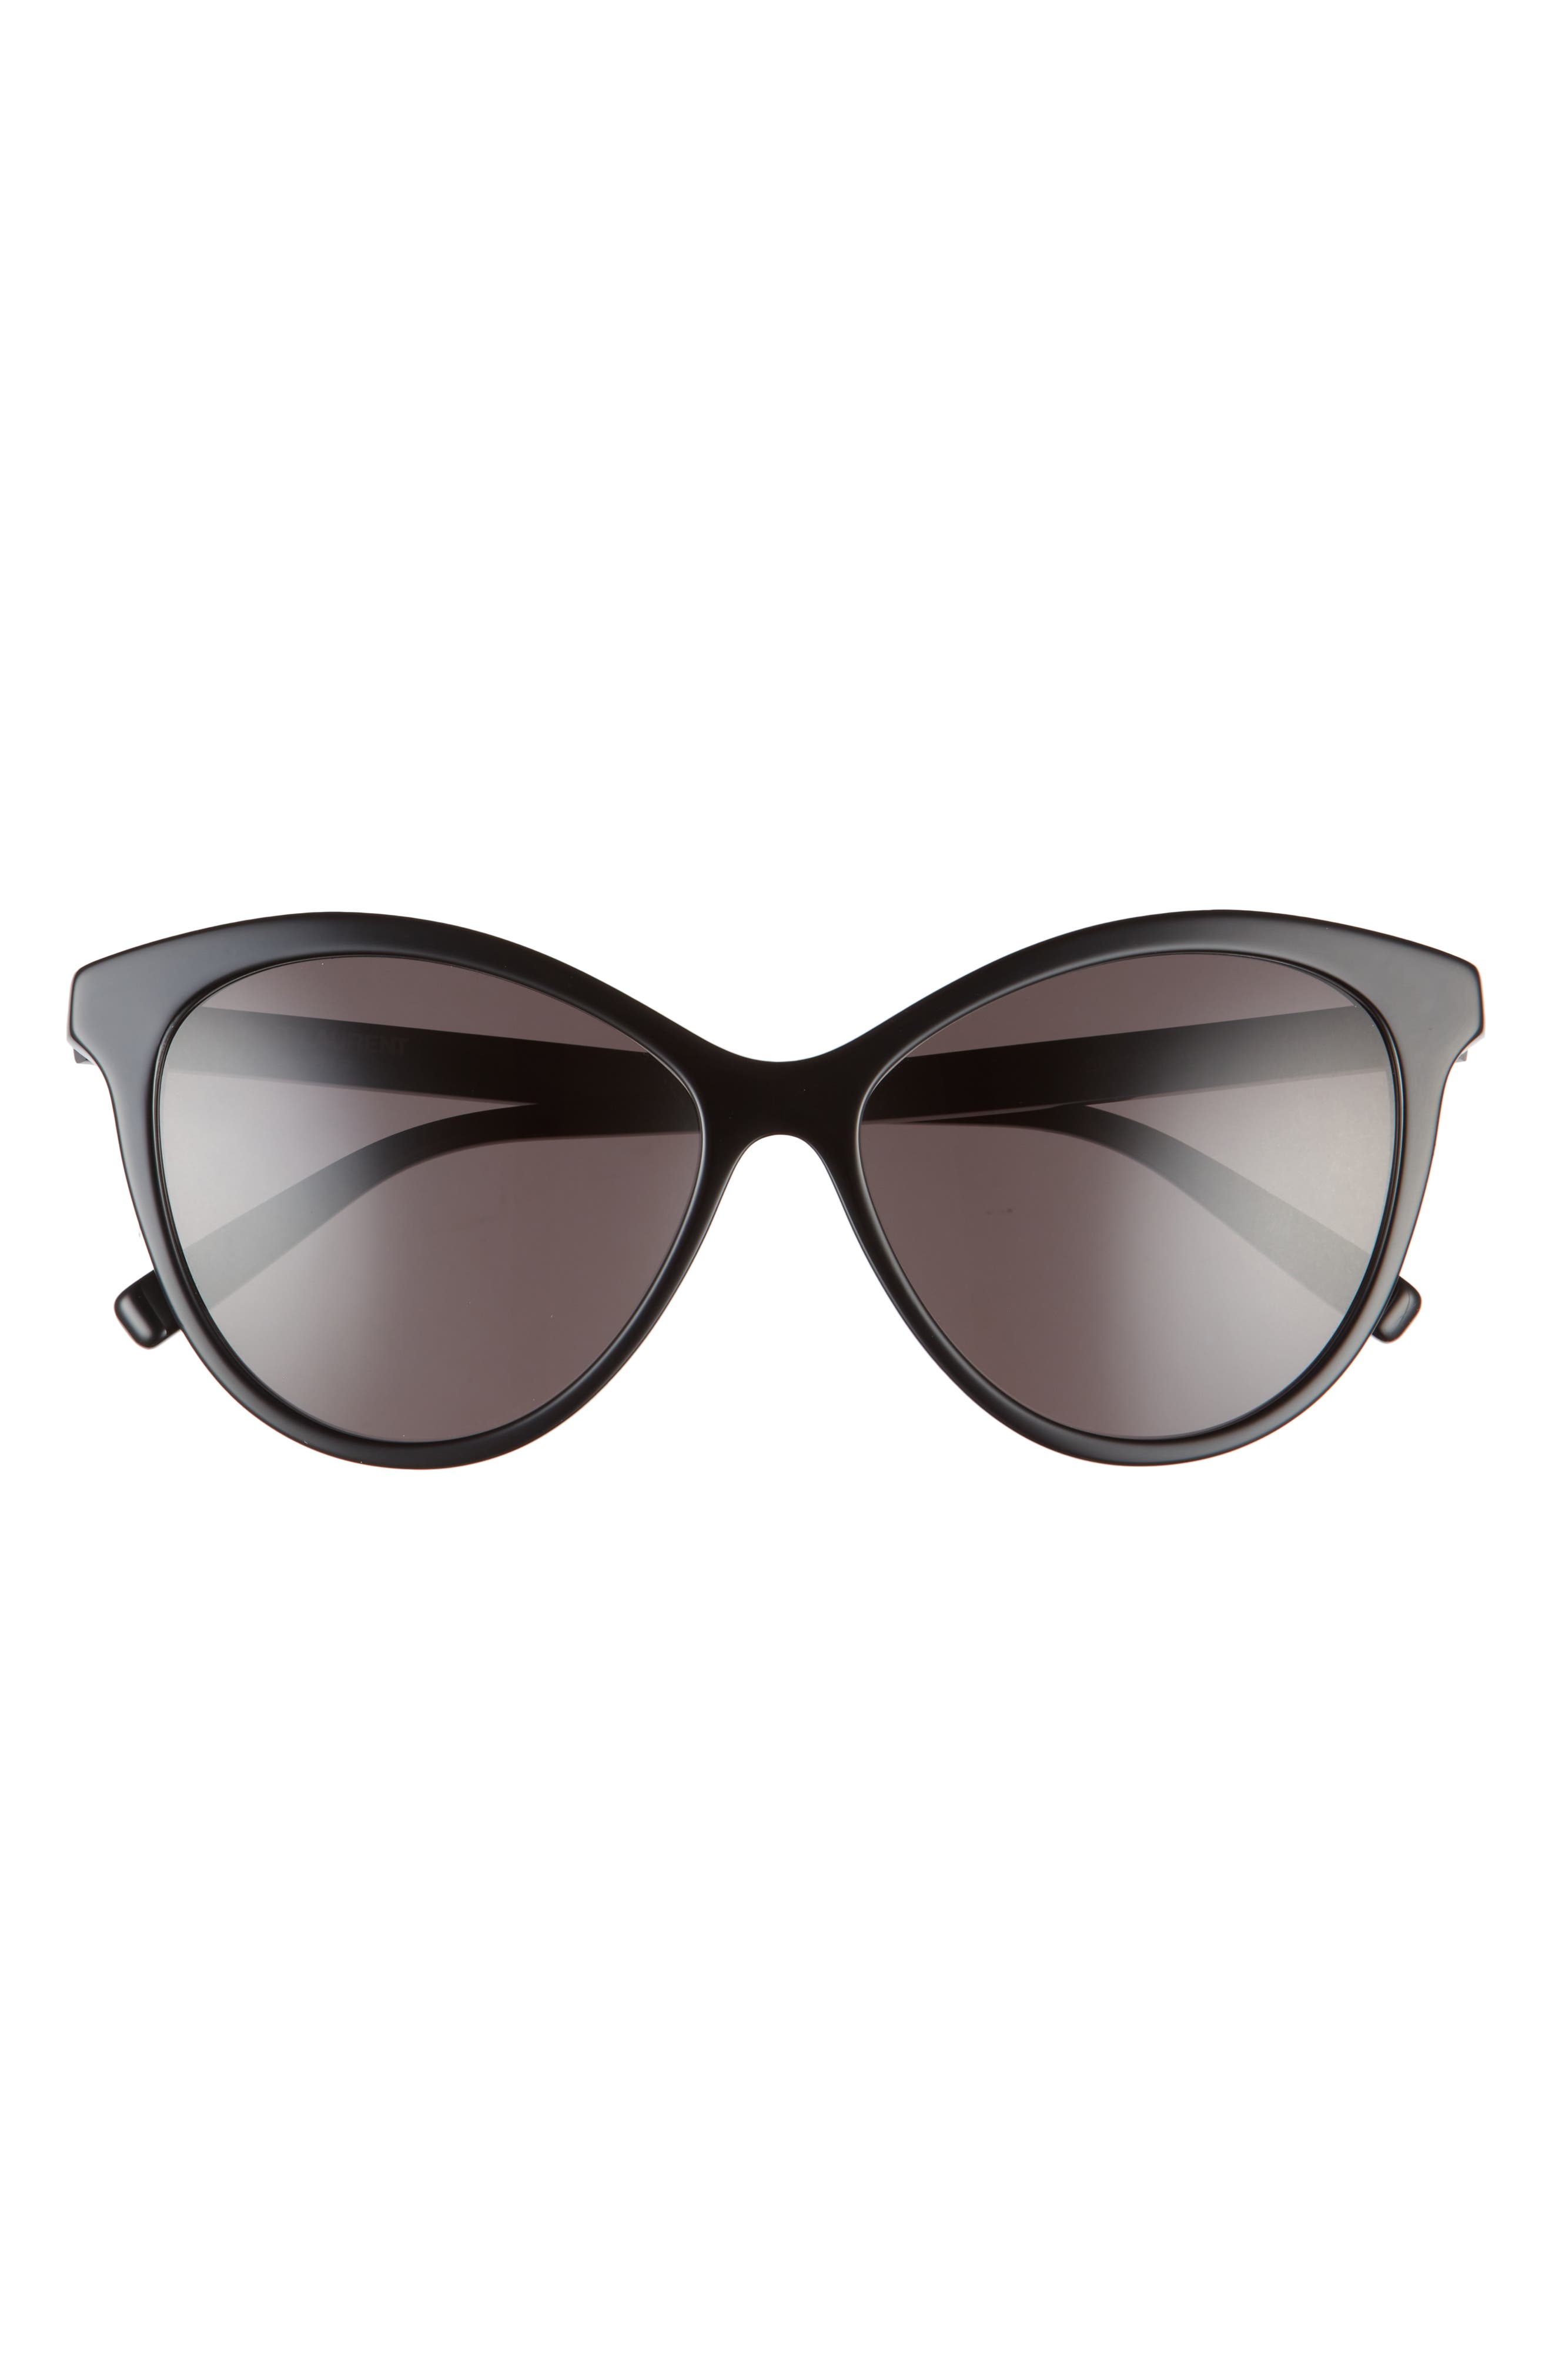 Saint Laurent 57mm Cat Eye Sunglasses in Black/Black at Nordstrom